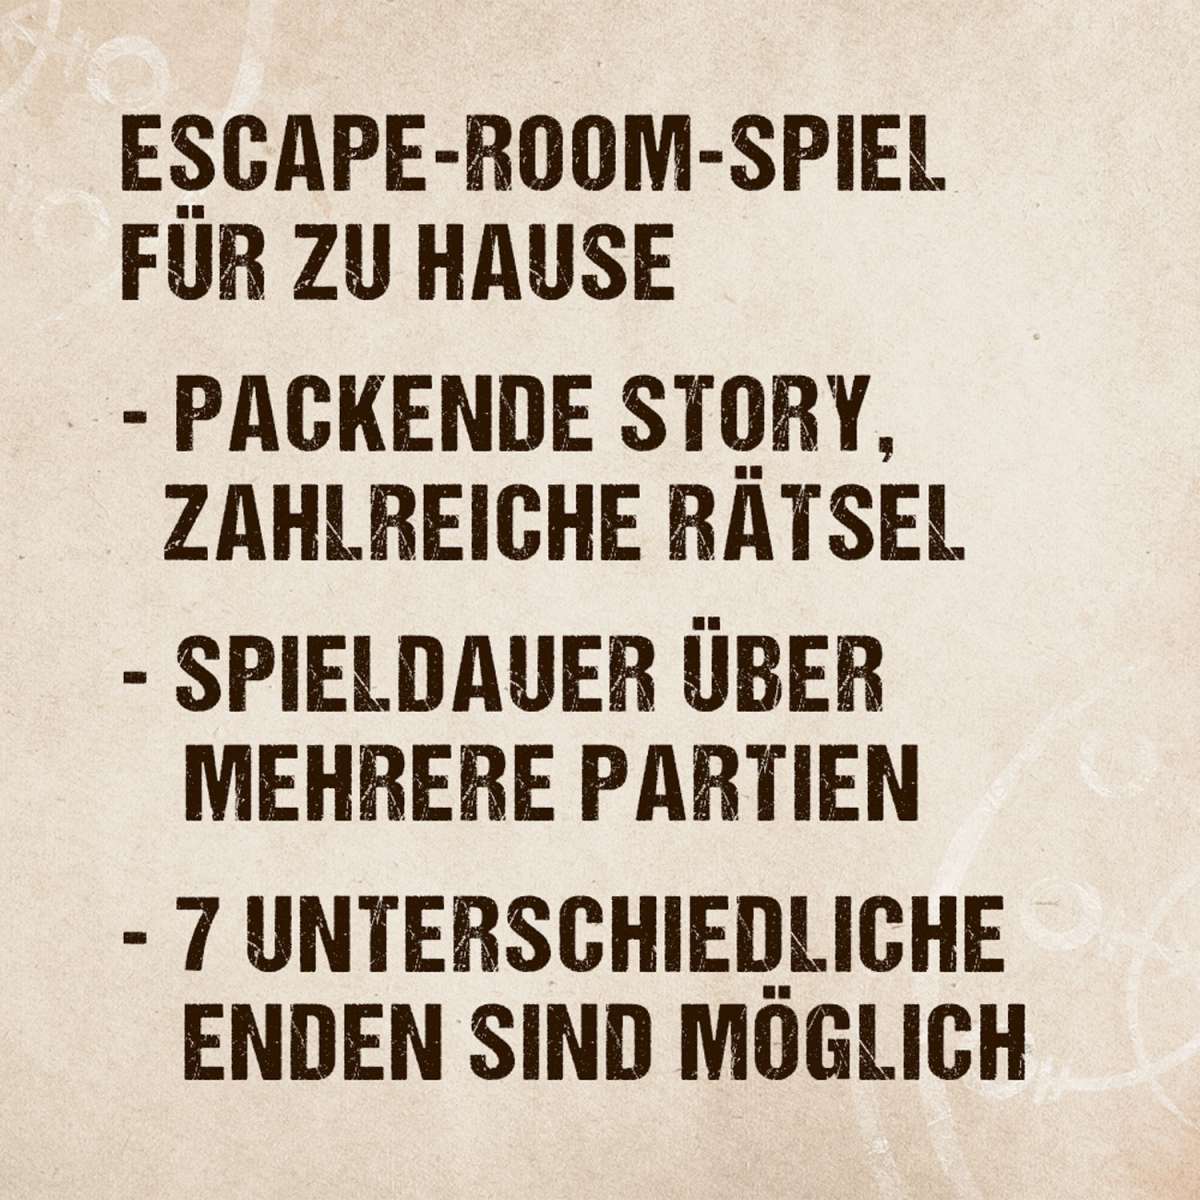 Escape Tales - The Awakening Vanellas Spielewelt